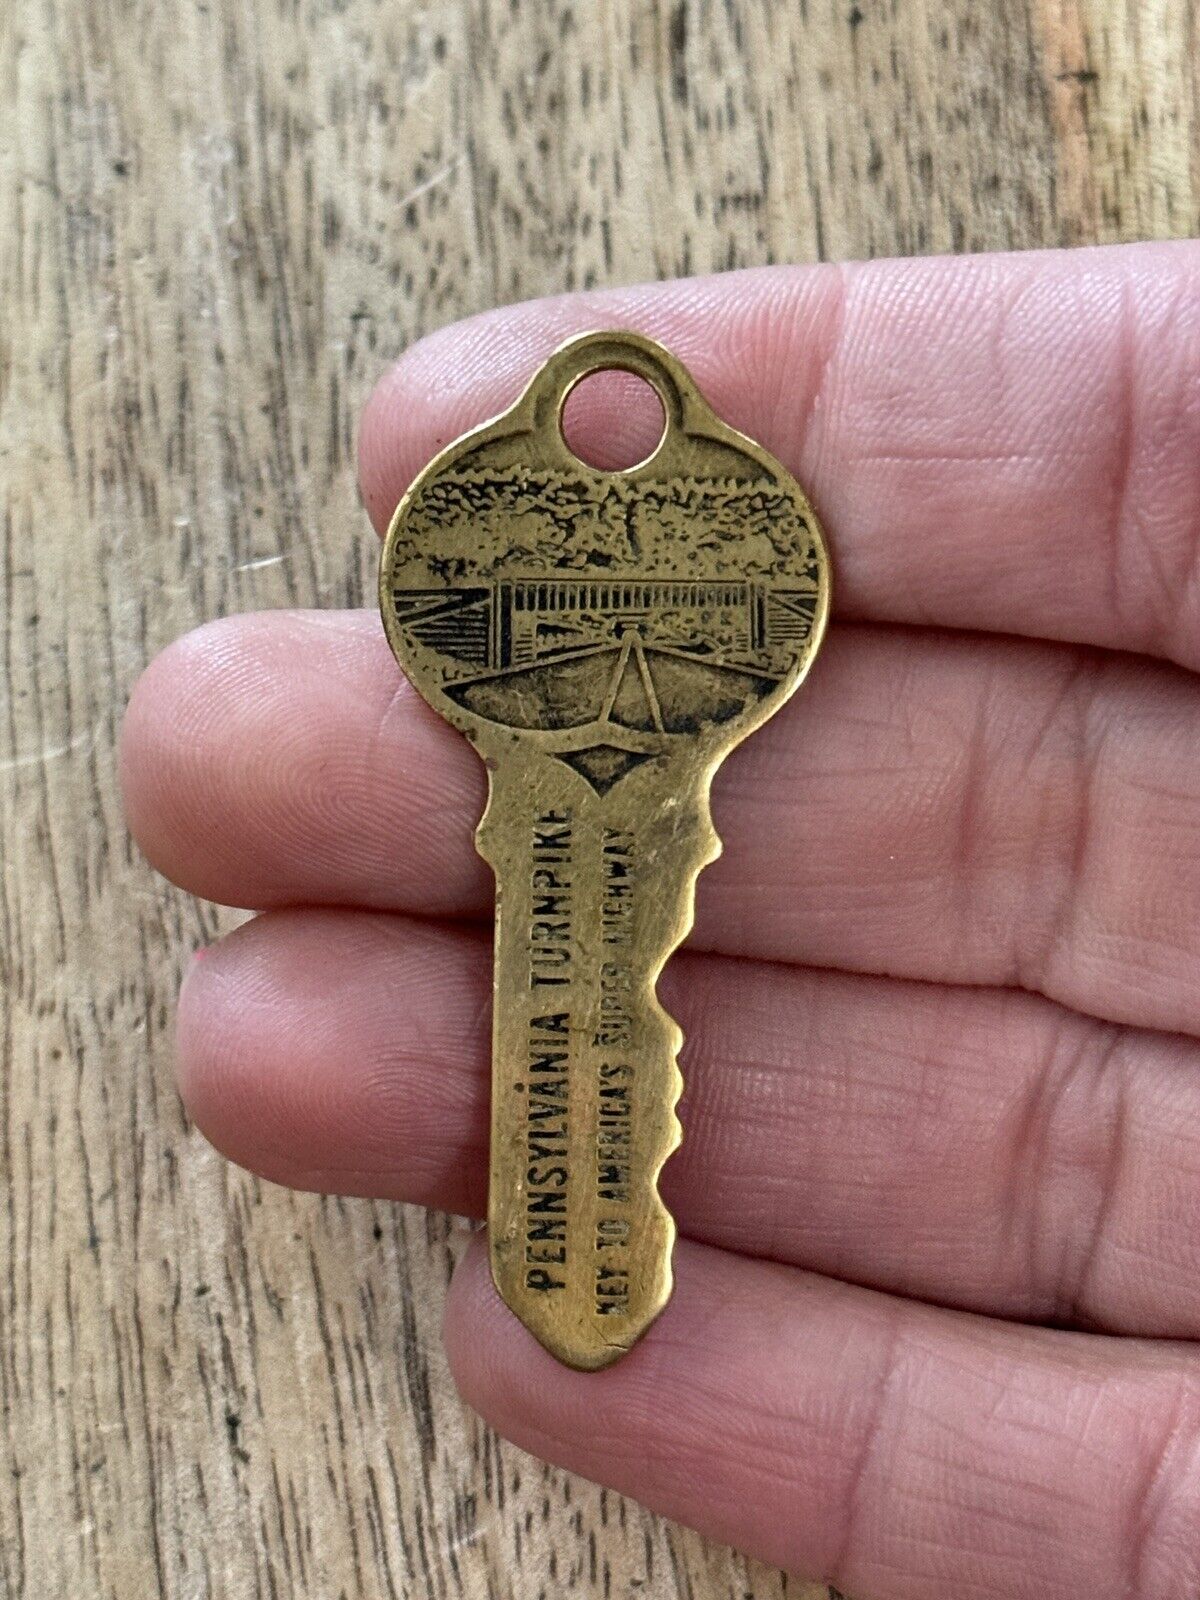 Vintage Pennsylvania Turnpike Commemorative Key Collectible ￼